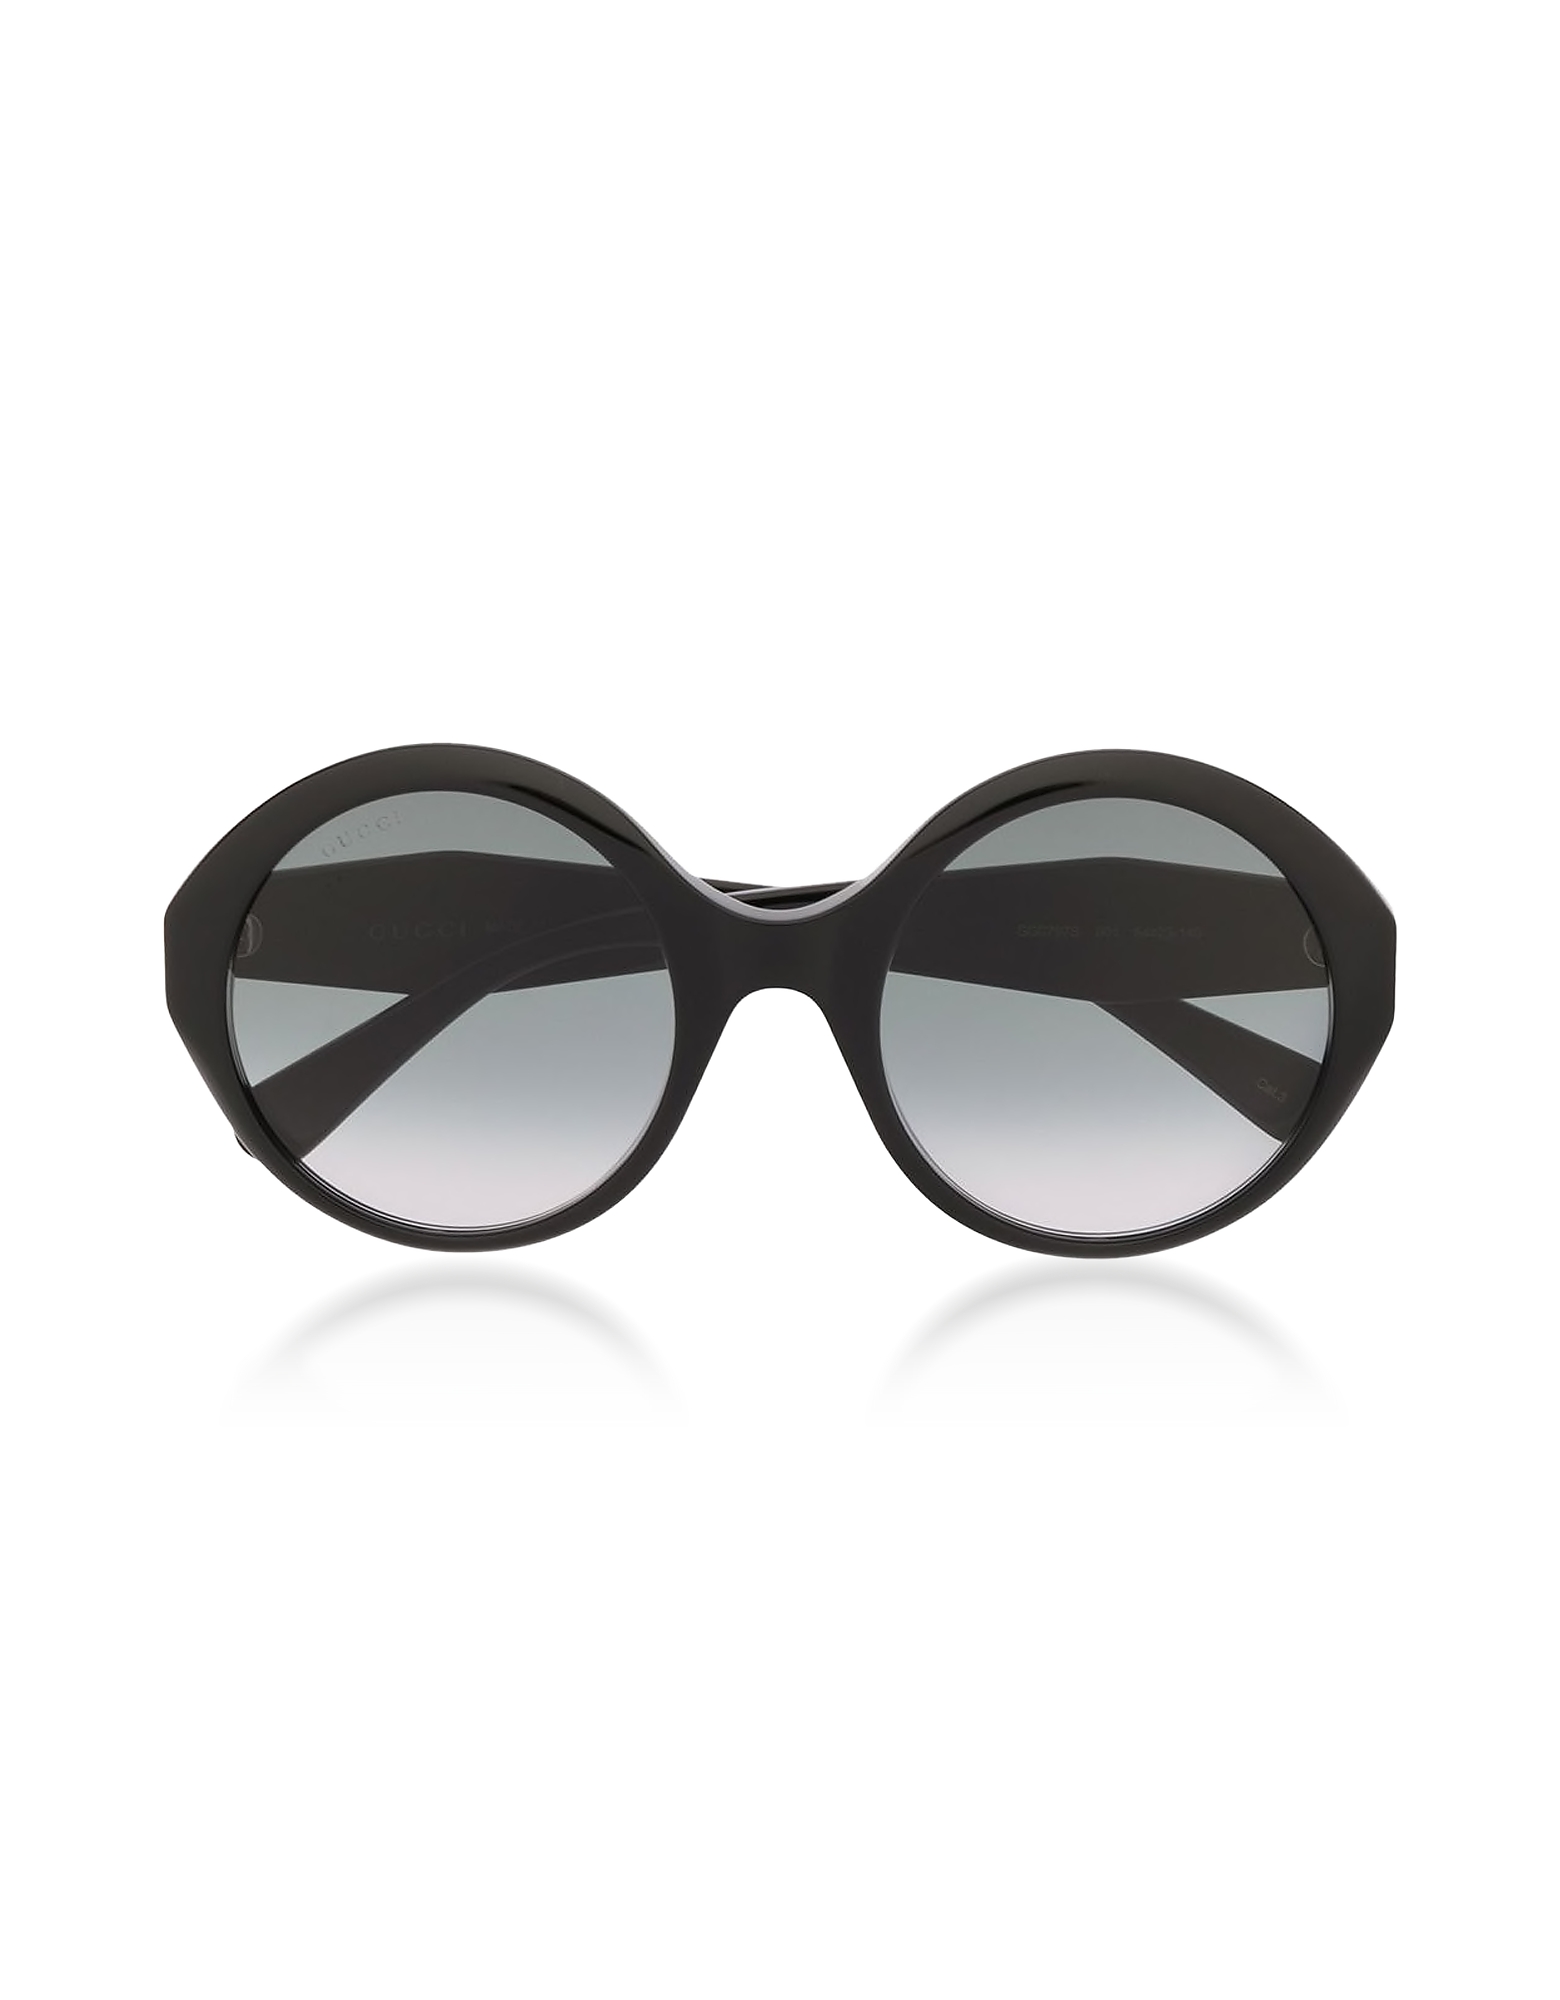 Gucci Sunglasses Round Black Acetate Frame Women's Sunglasses w/Grey Lenses